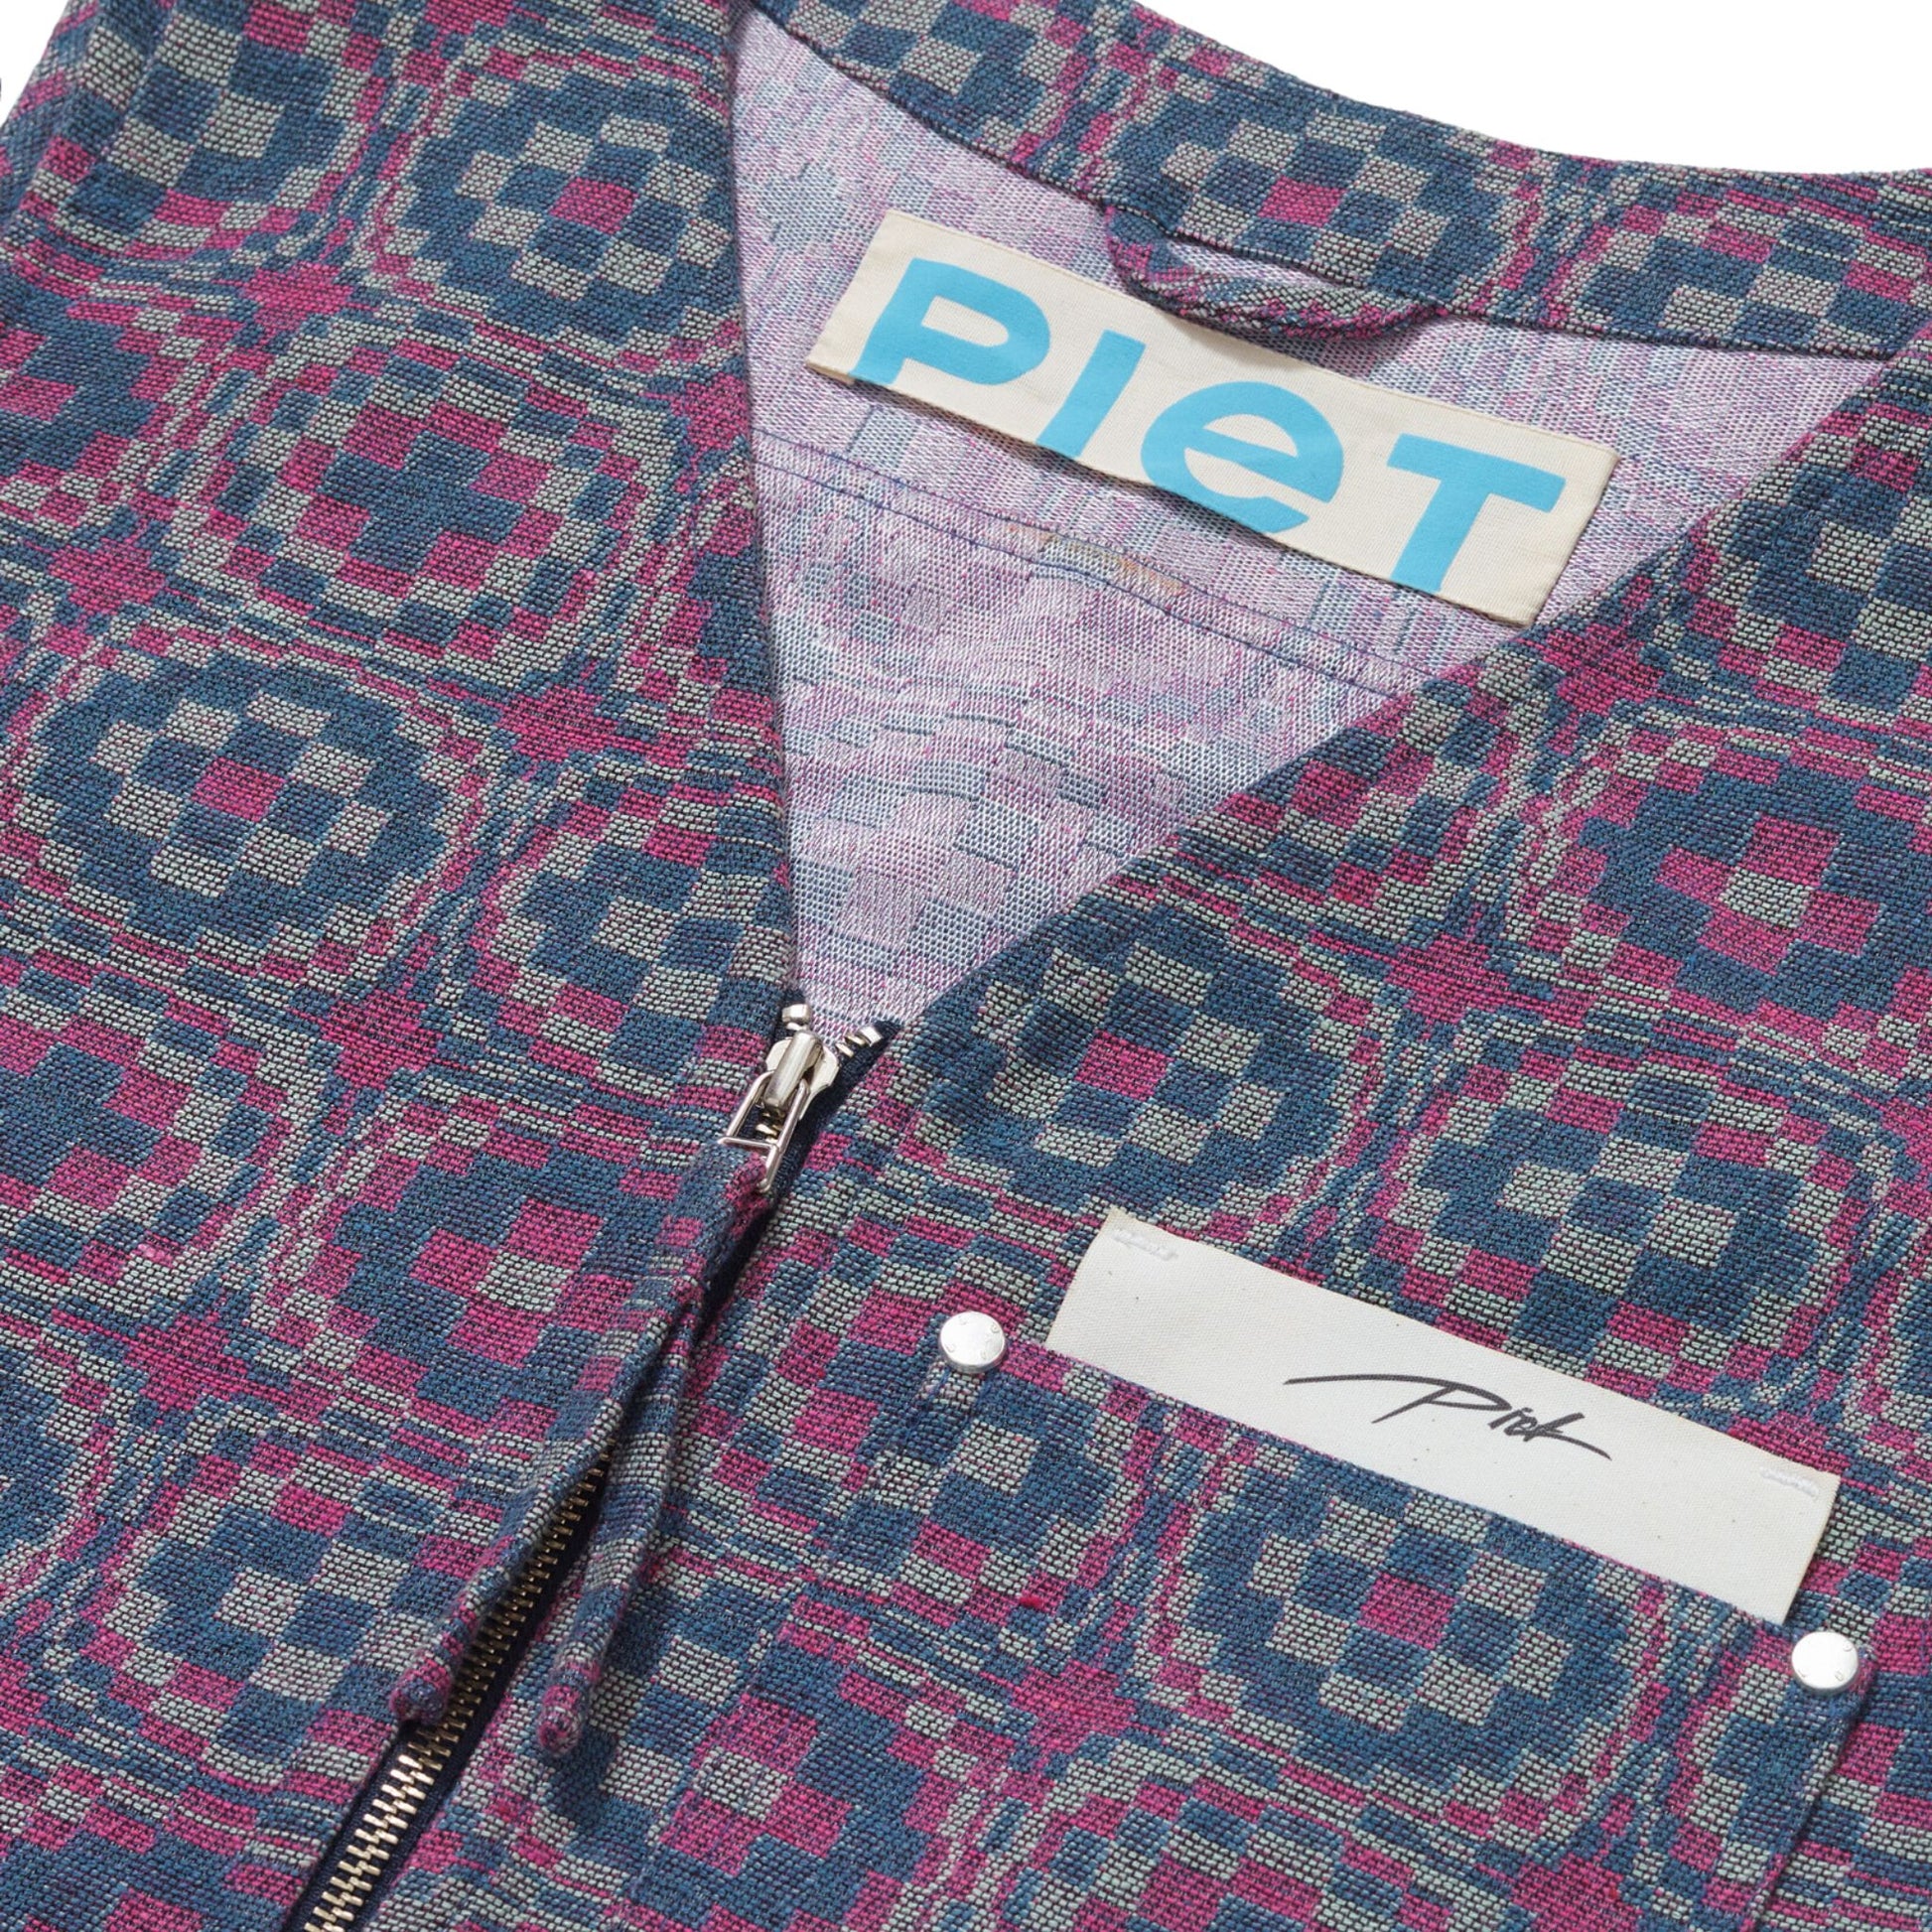 PIET - Jacquard Psy Vest - THE GAME